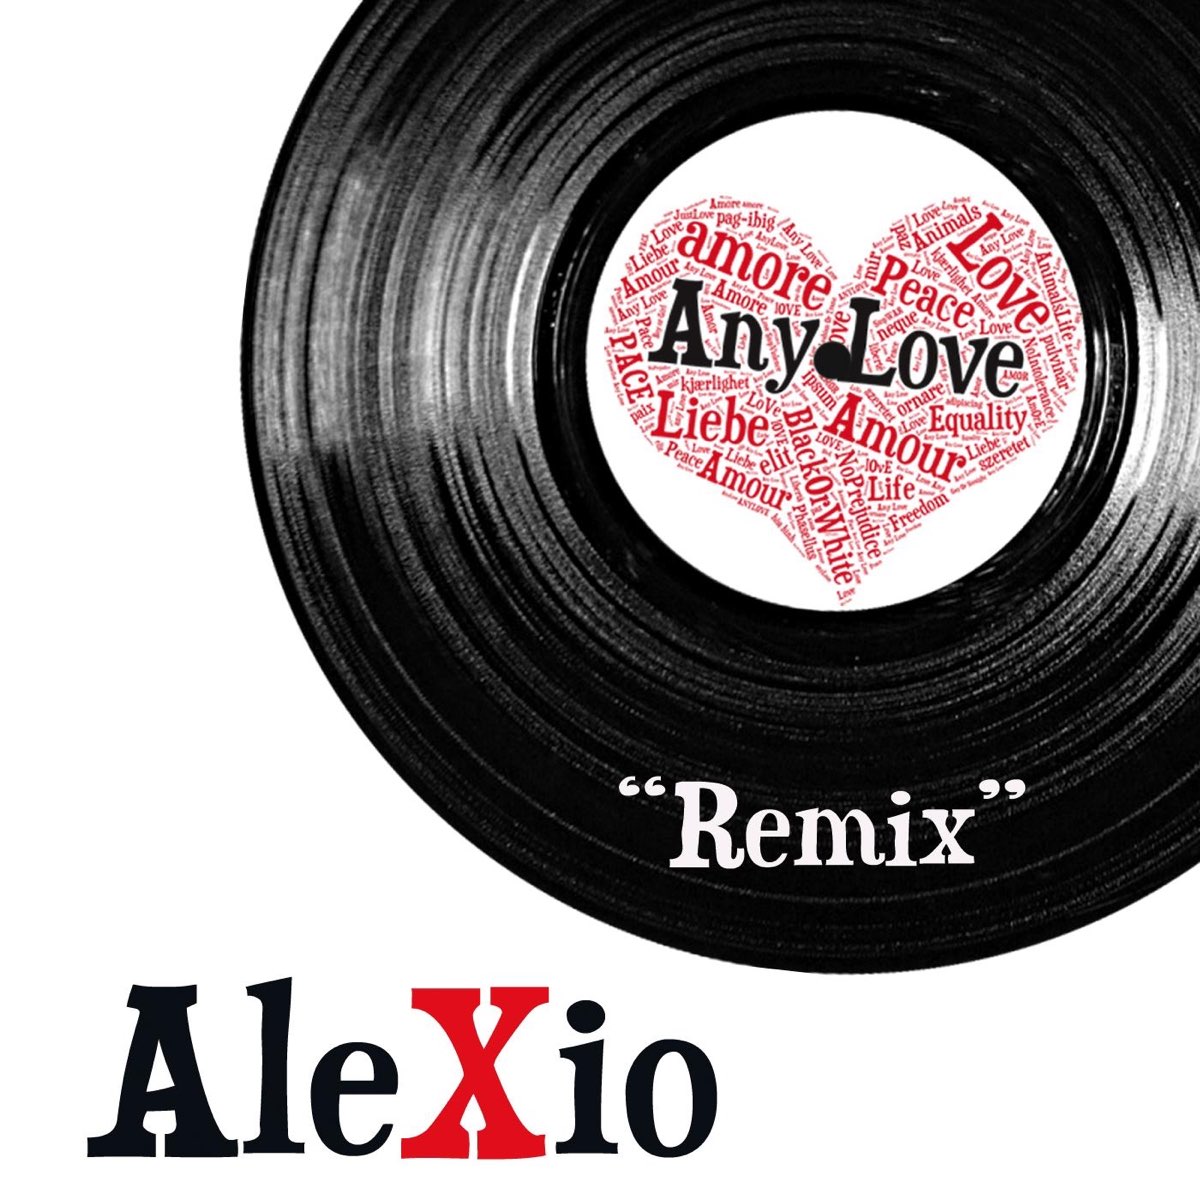 Love Remix. Lovely песня ремикс. Любимые Remix. Any Love.